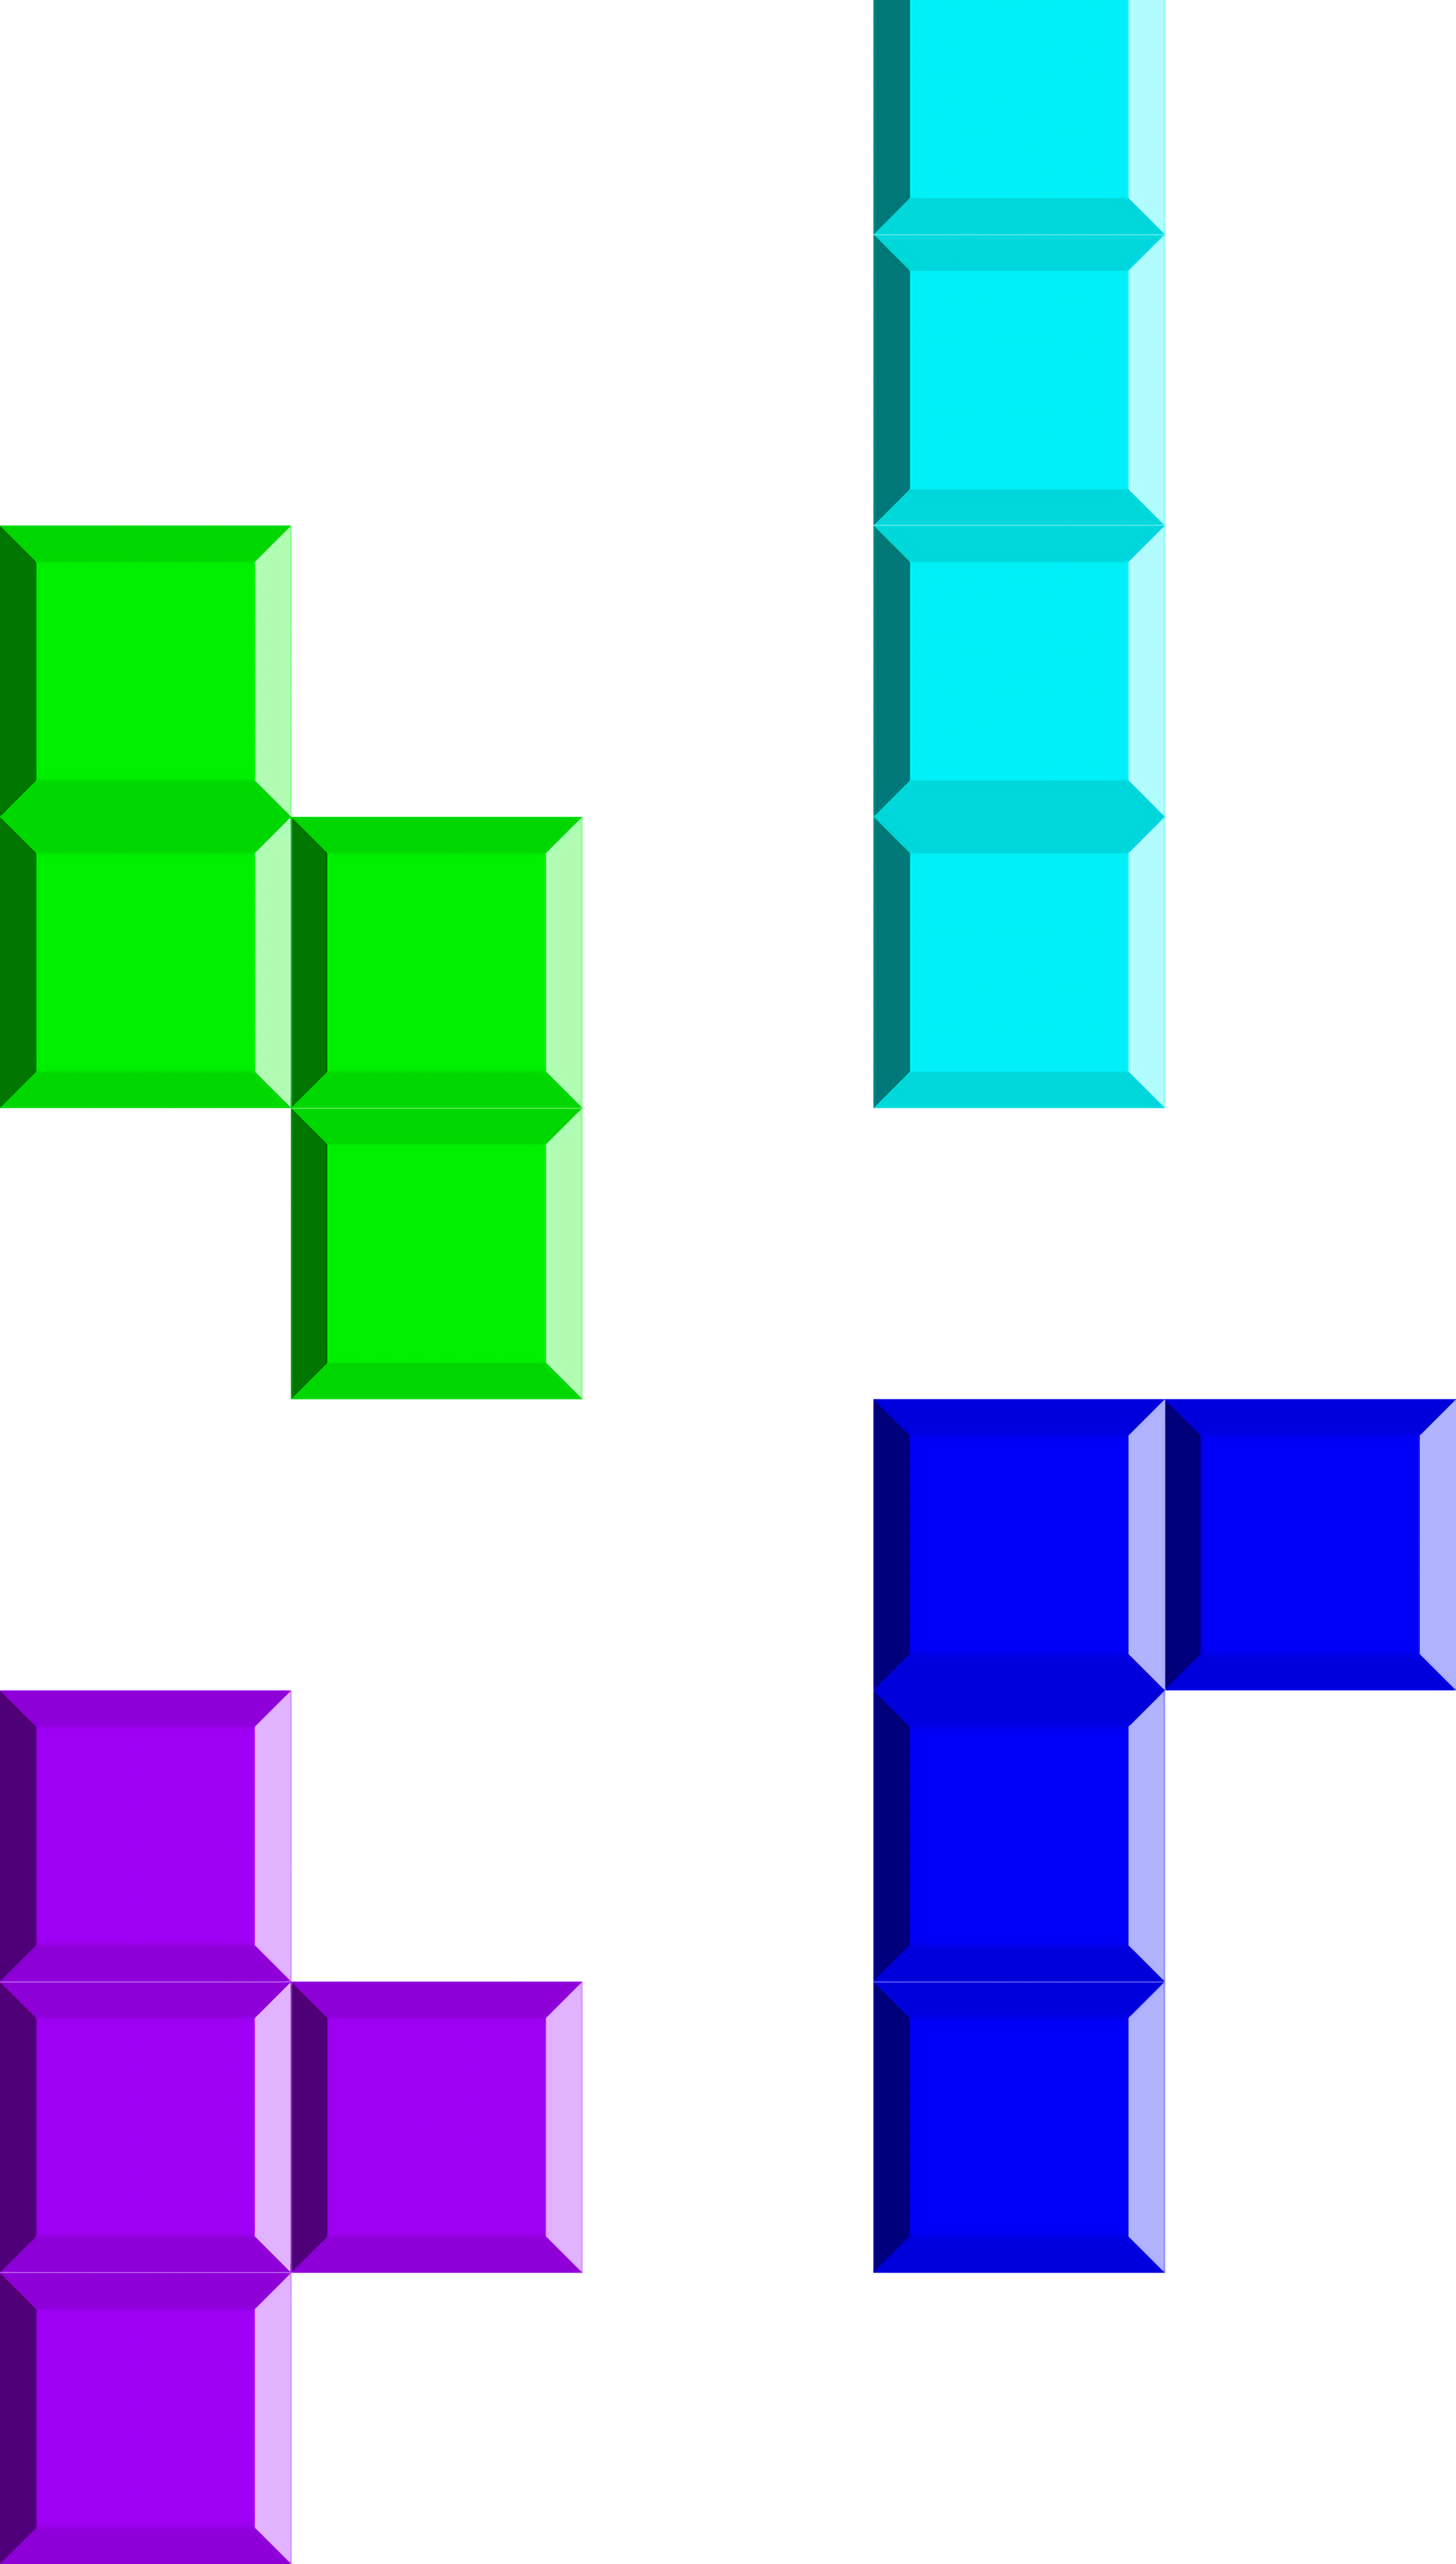 Giochi Tetris